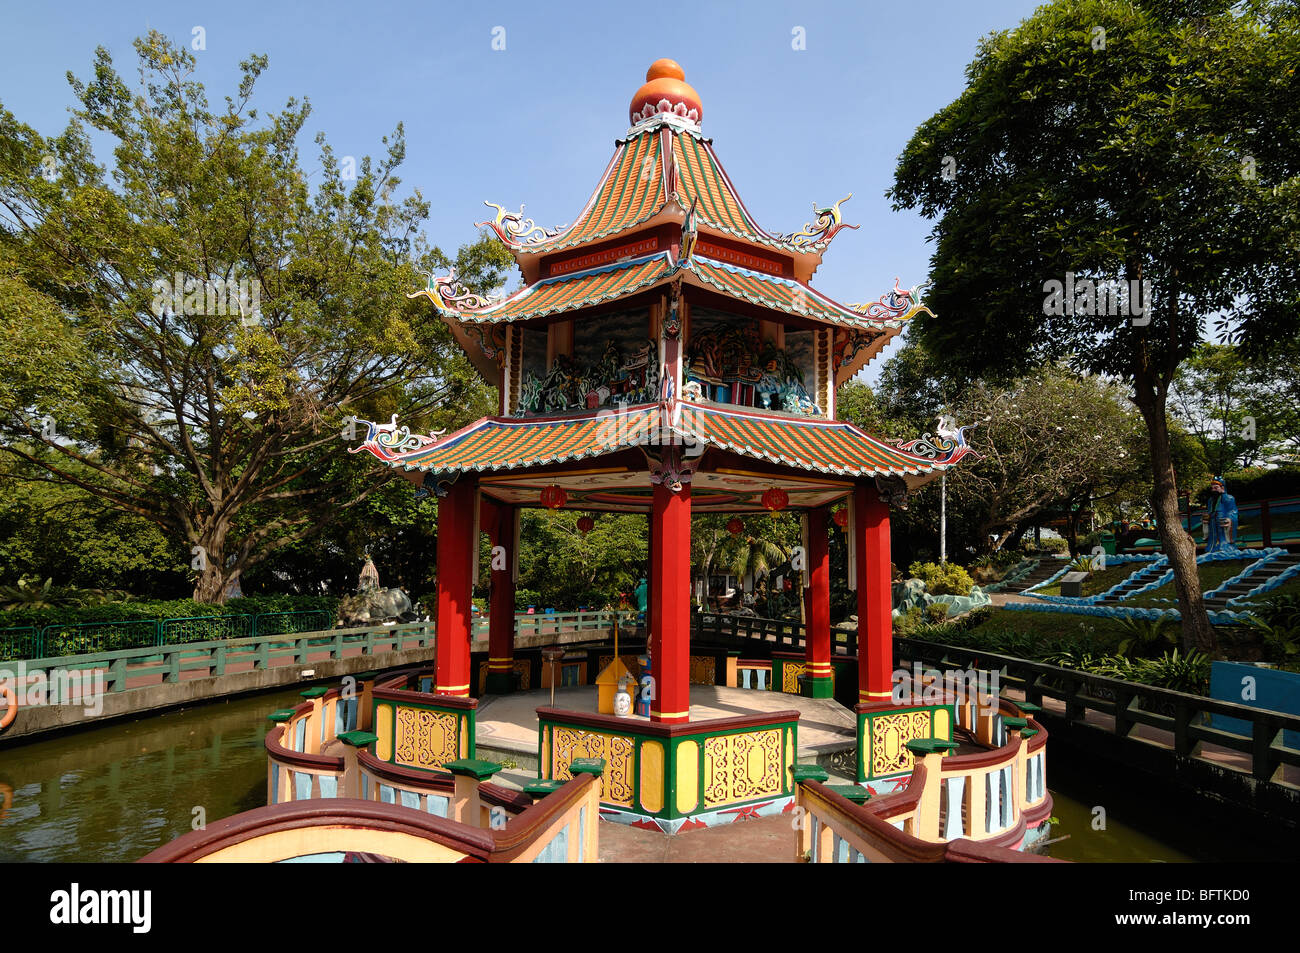 Main Pagoda and Fish Pond, Tiger Balm Gardens Chinese Theme Park, Singapore Stock Photo